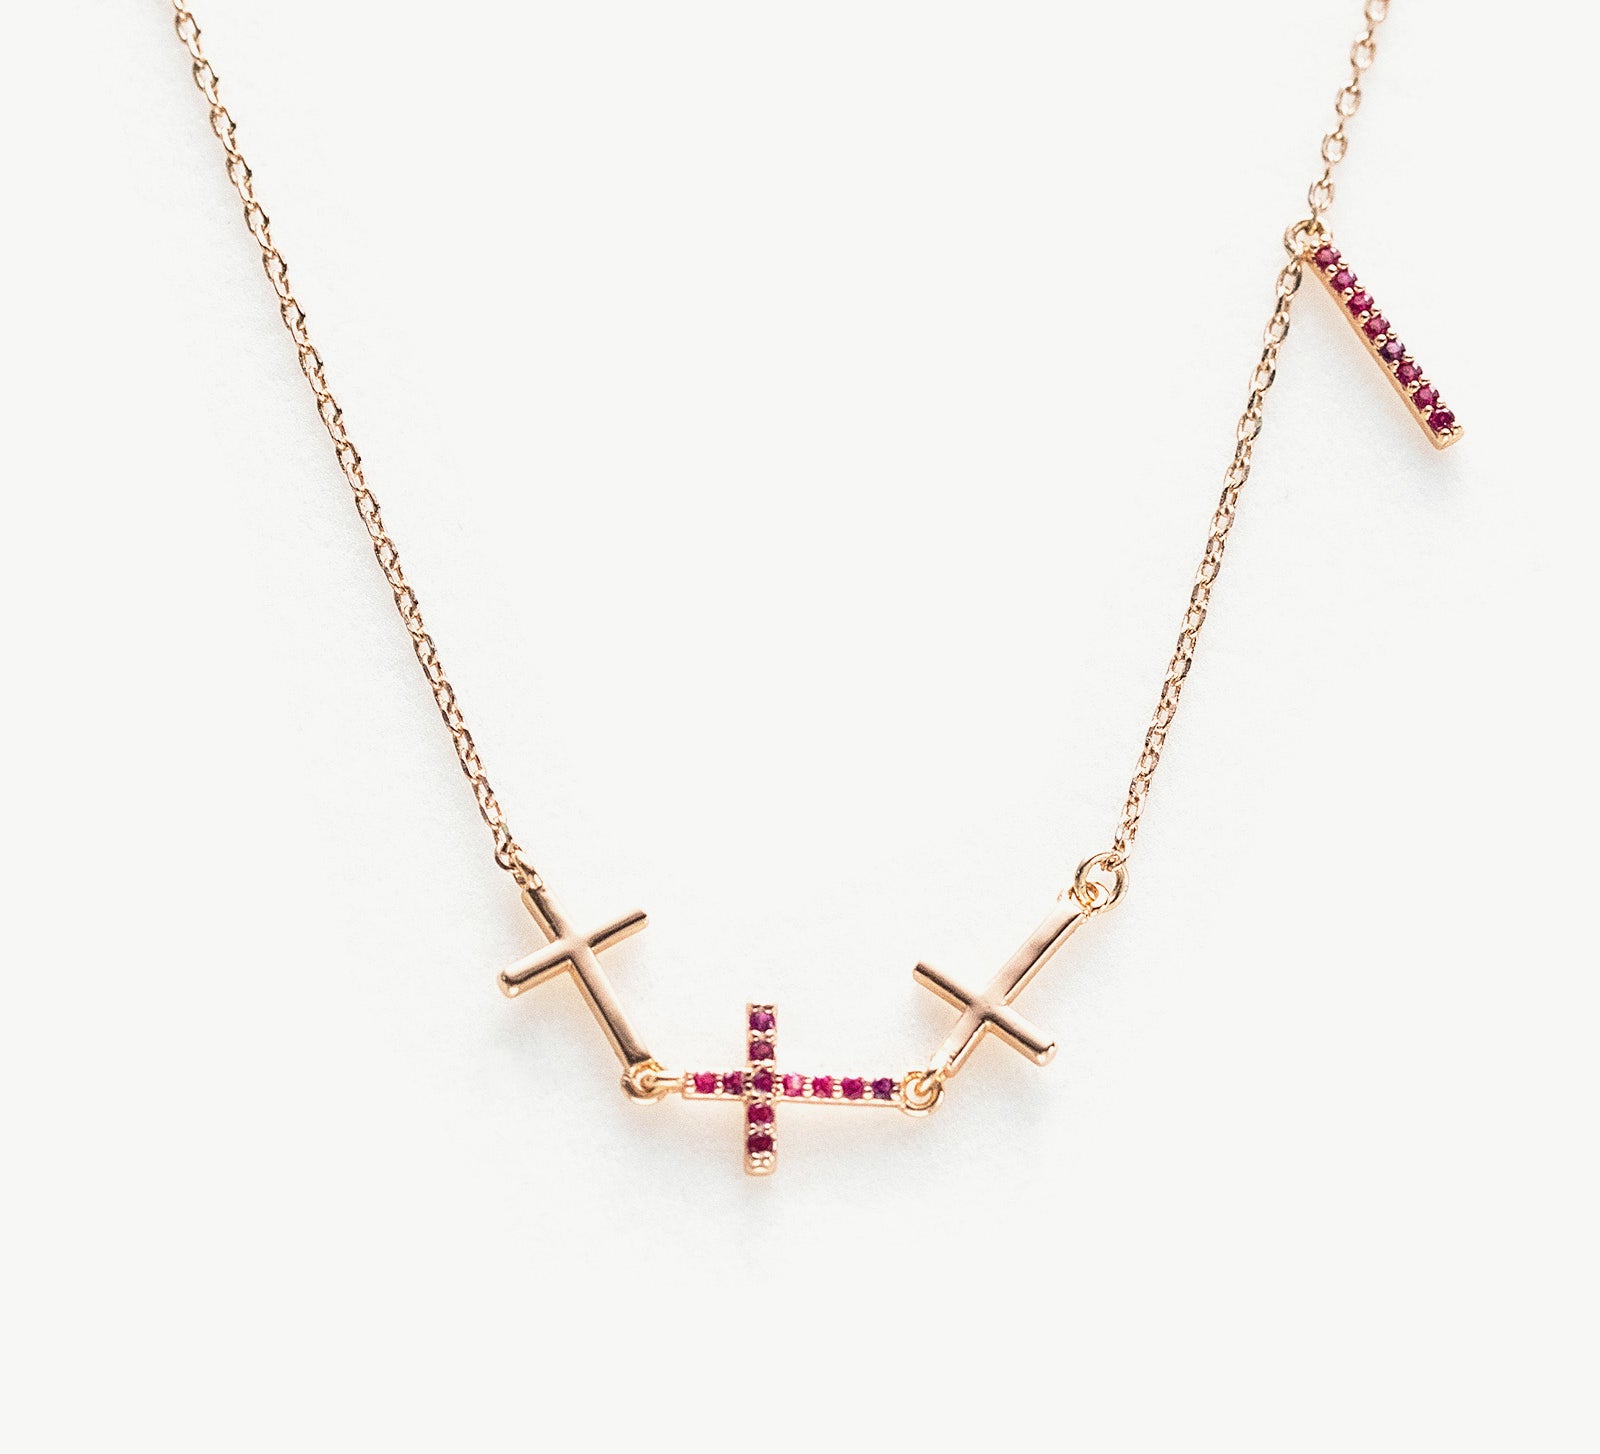 Sideways Crosses Chain Necklace